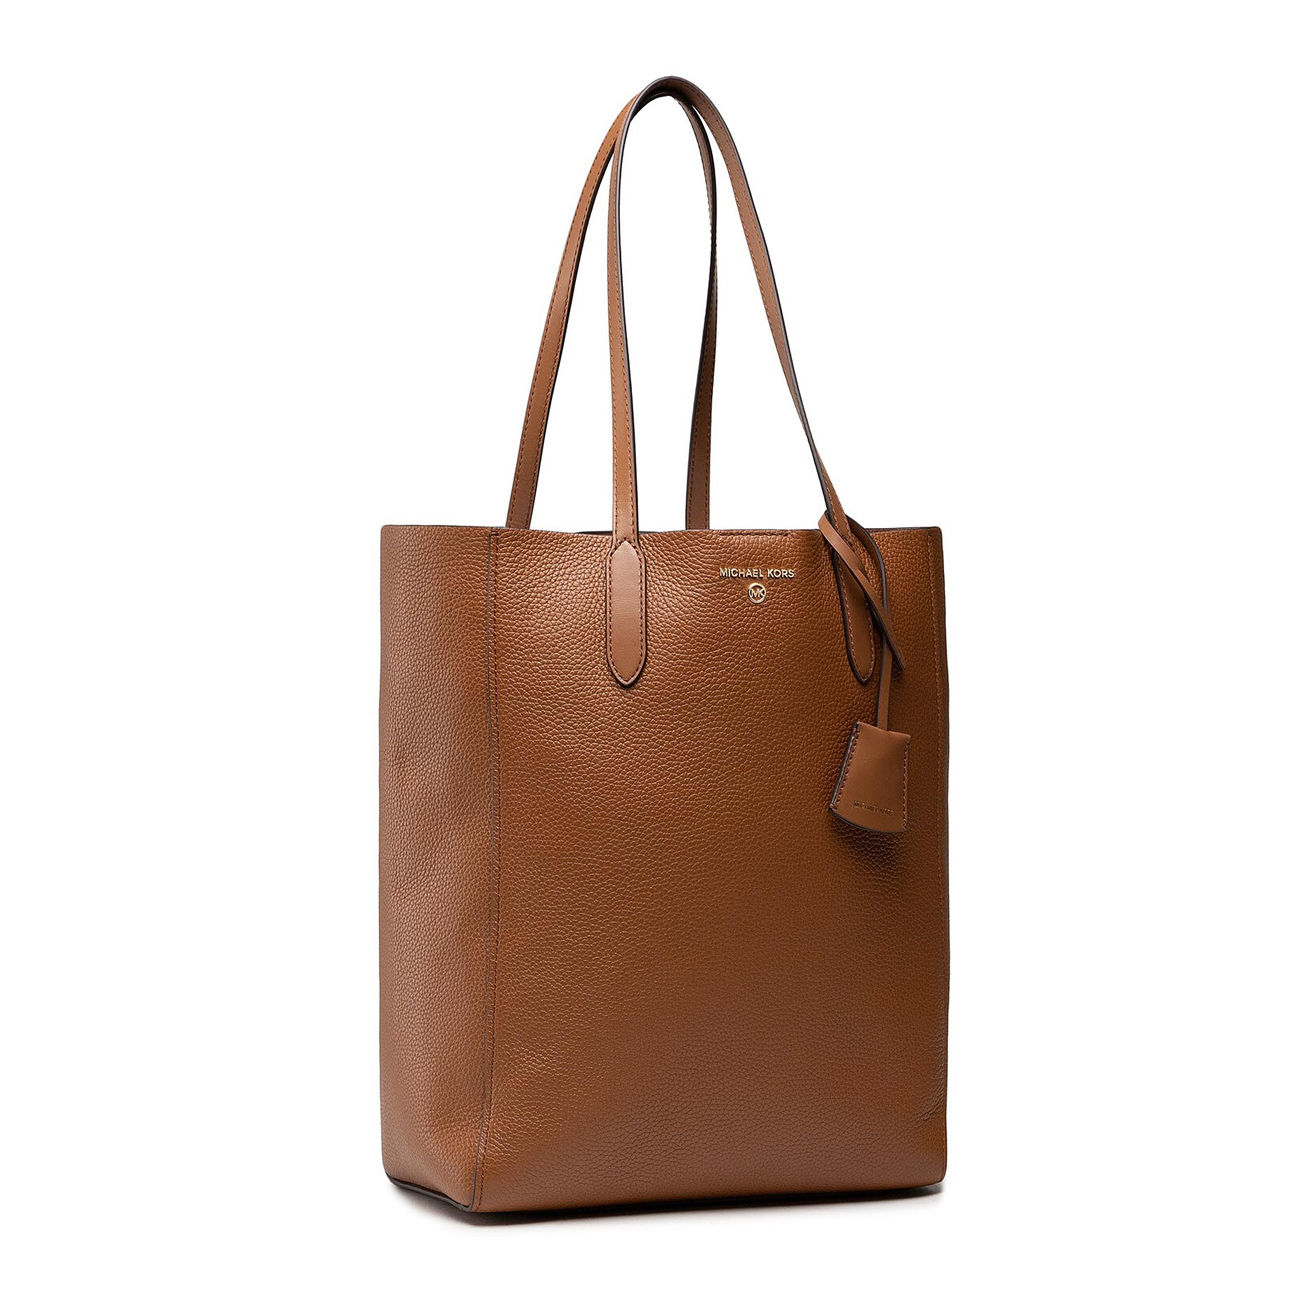 Michael Kors Orange Leather Suede Shoulder Tote Handbag Tan Straps Purse MK  Logo